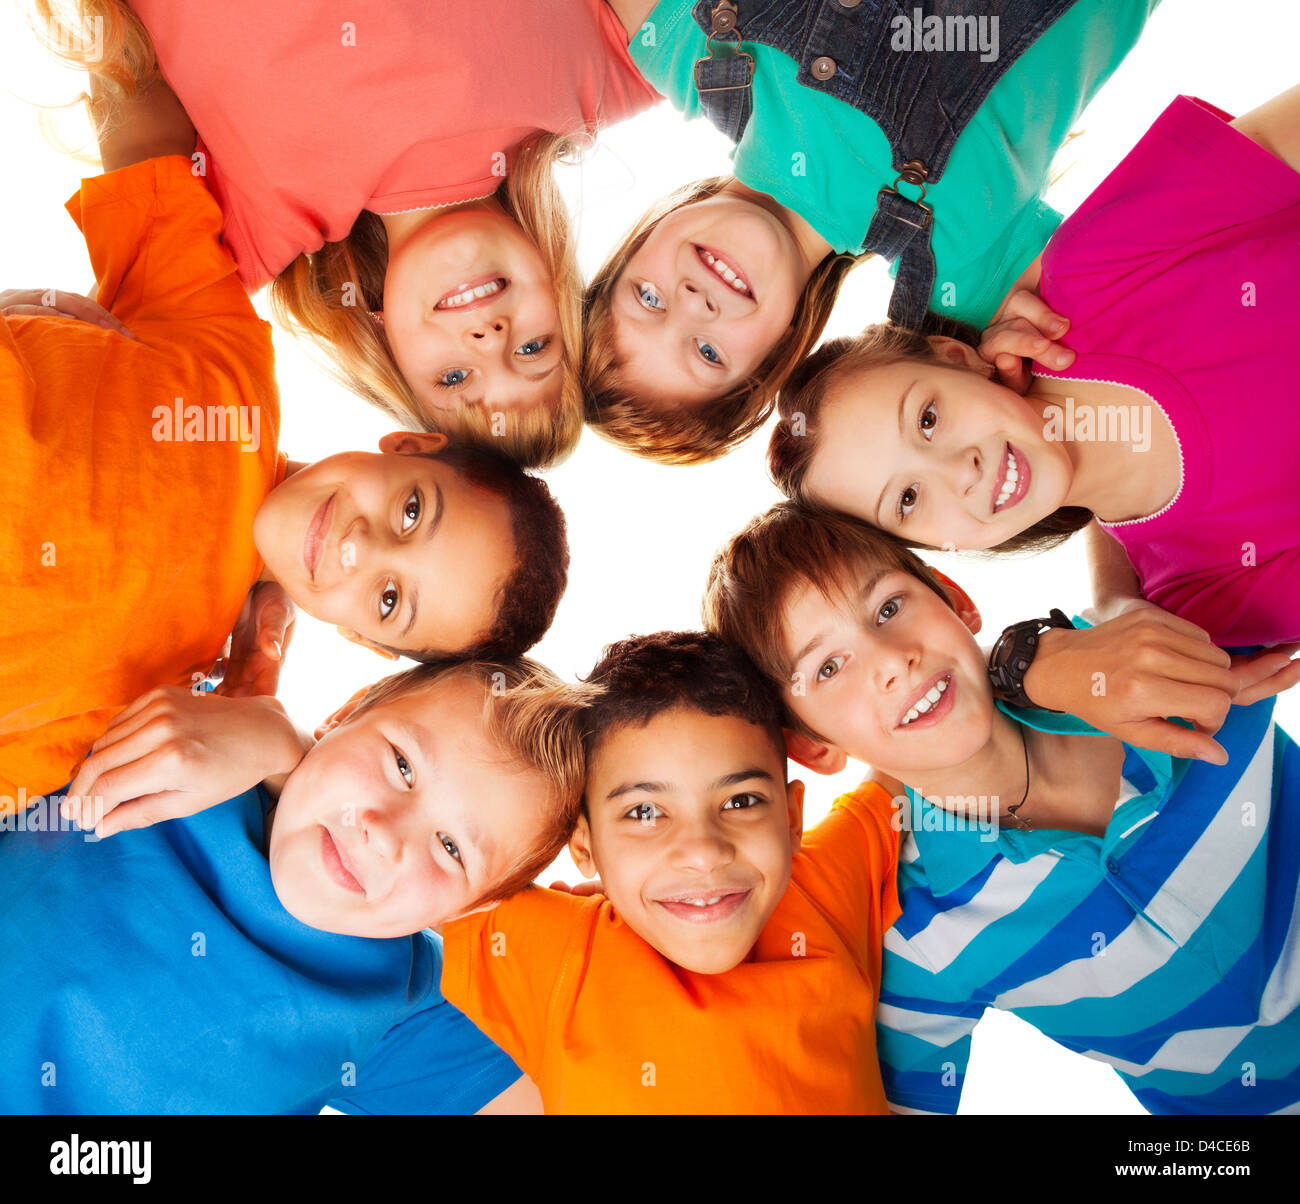 smiling diverse children